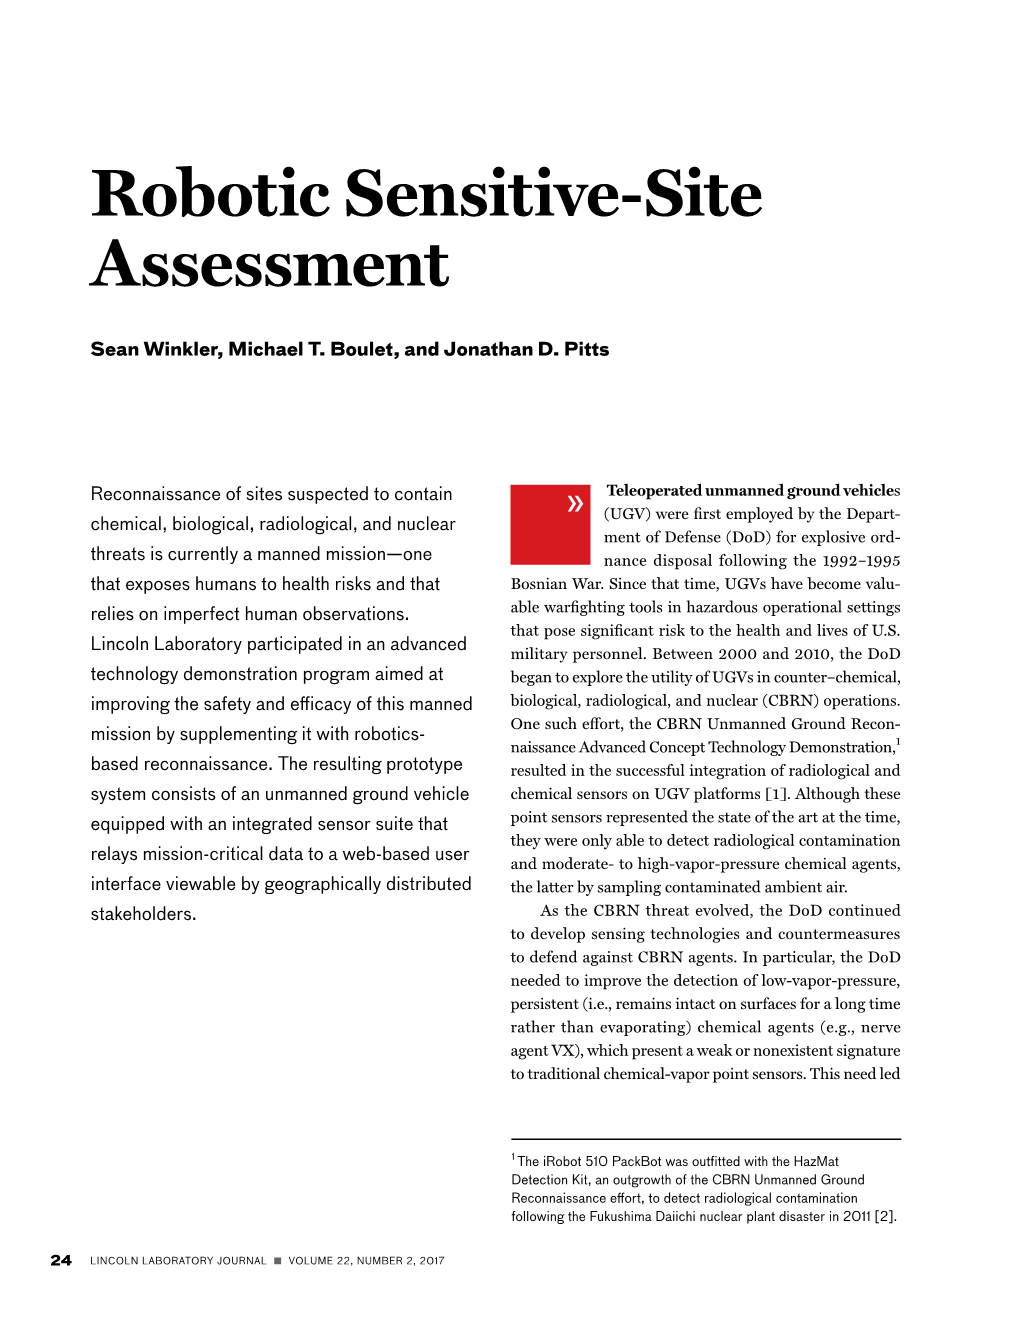 Robotic Sensitive-Site Assessment